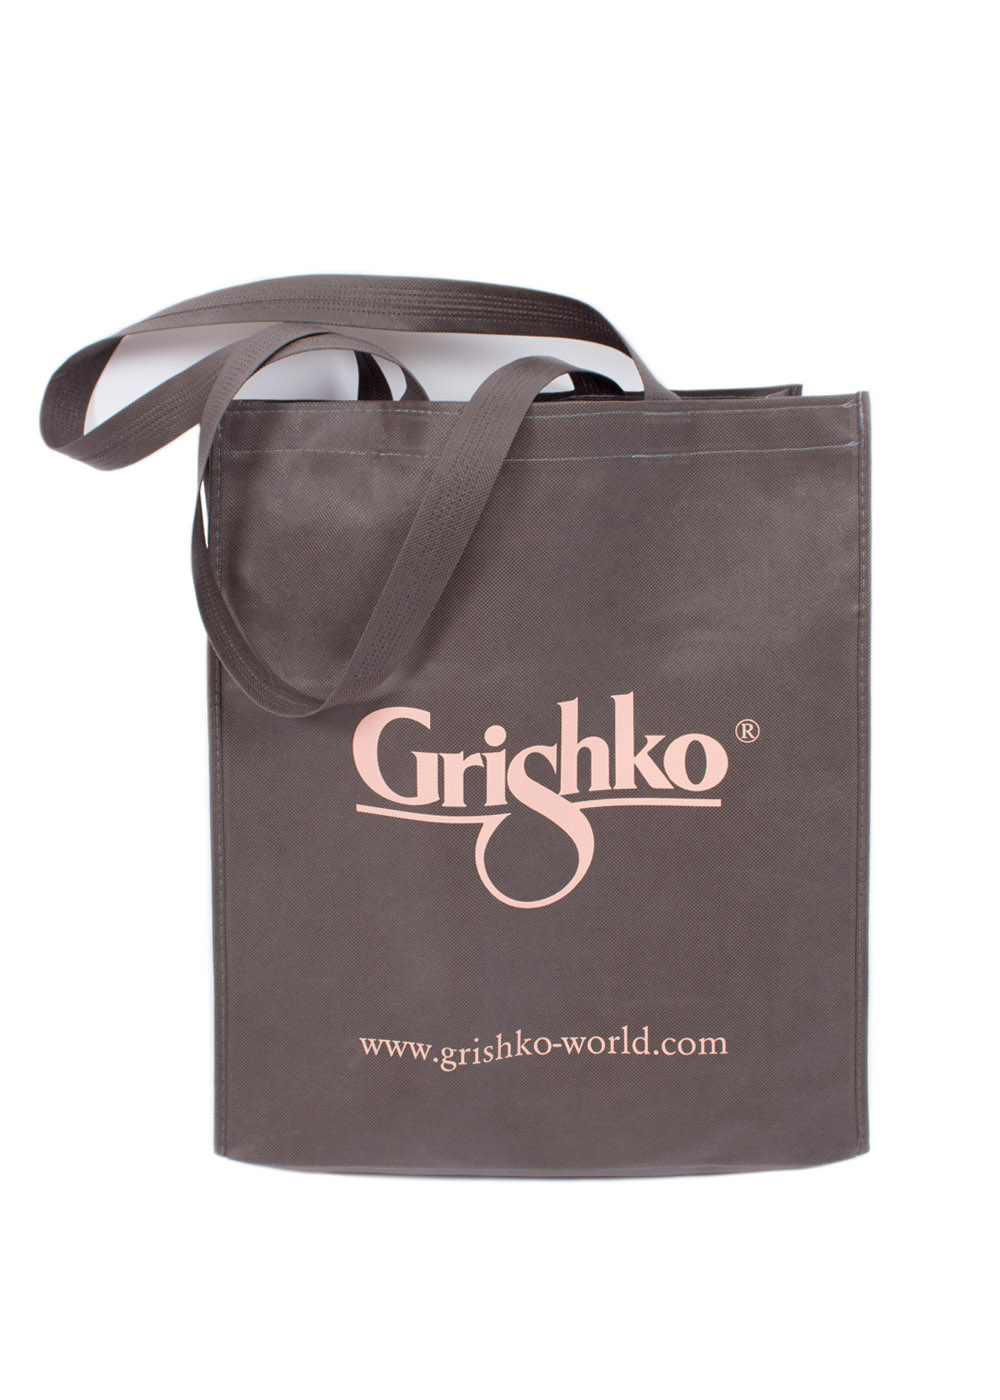 www grishko world com